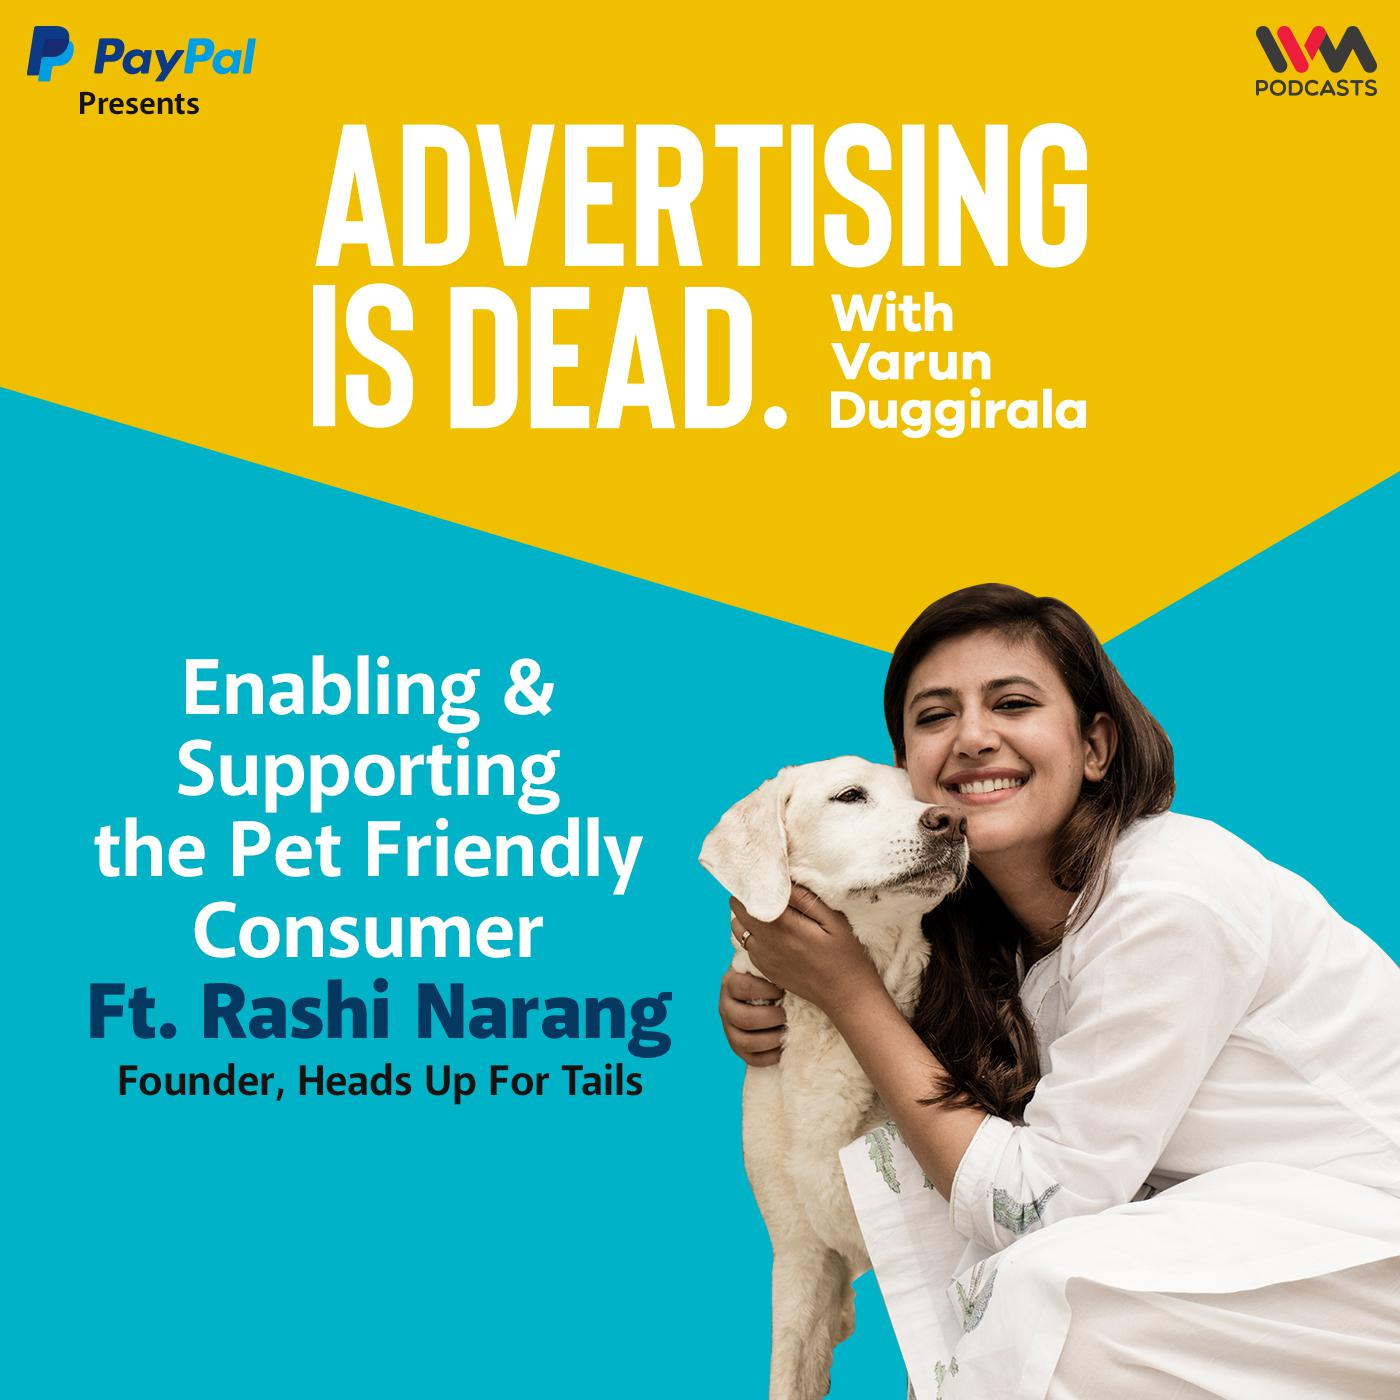 Rashi Narang on Enabling & Supporting the Pet Friendly Consumer